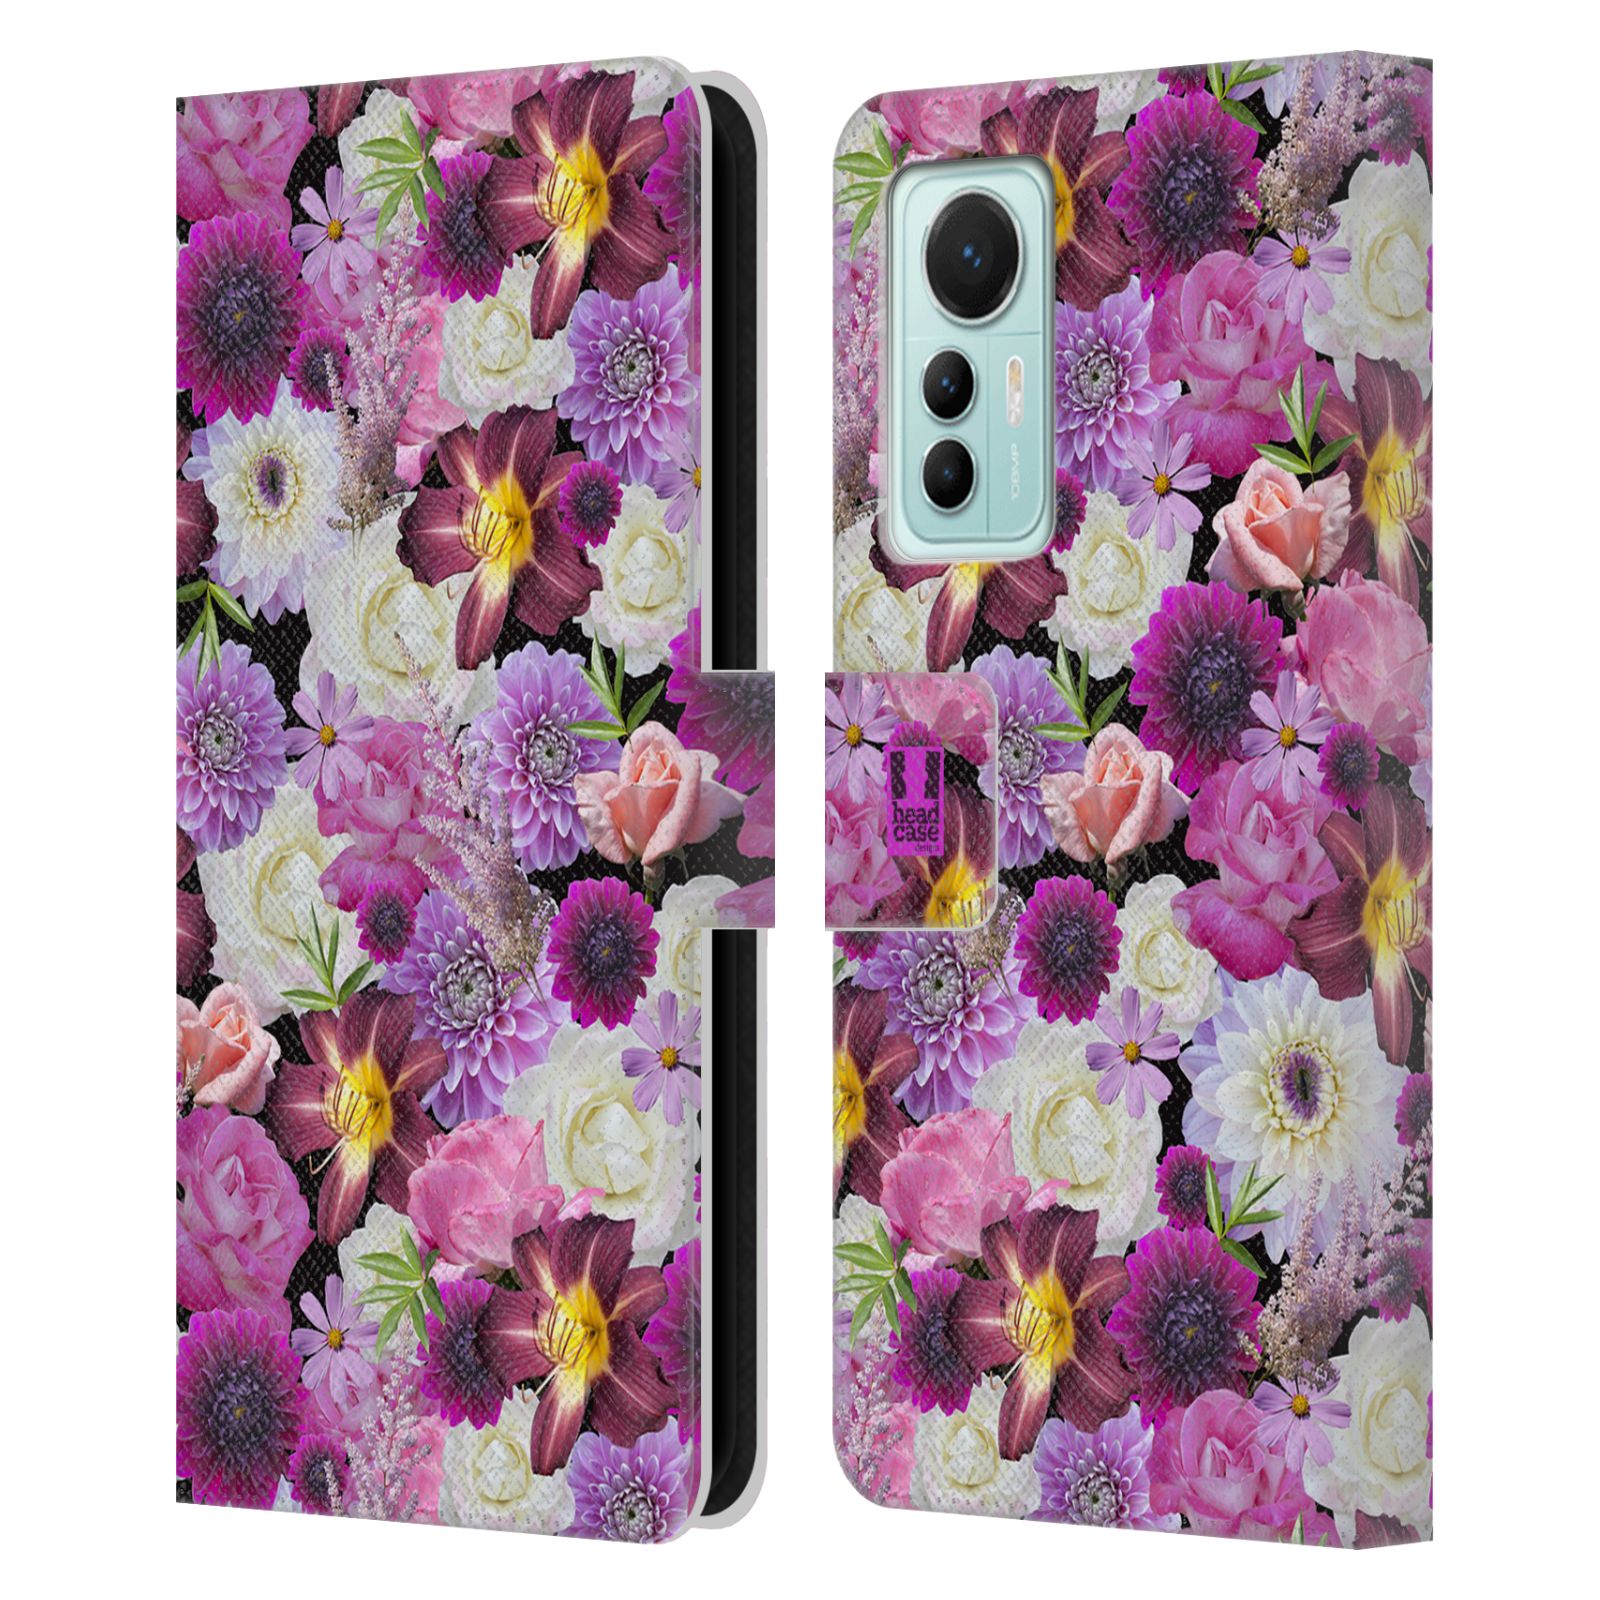 Pouzdro HEAD CASE na mobil Xiaomi 12 LITE květy foto fialová a bílá